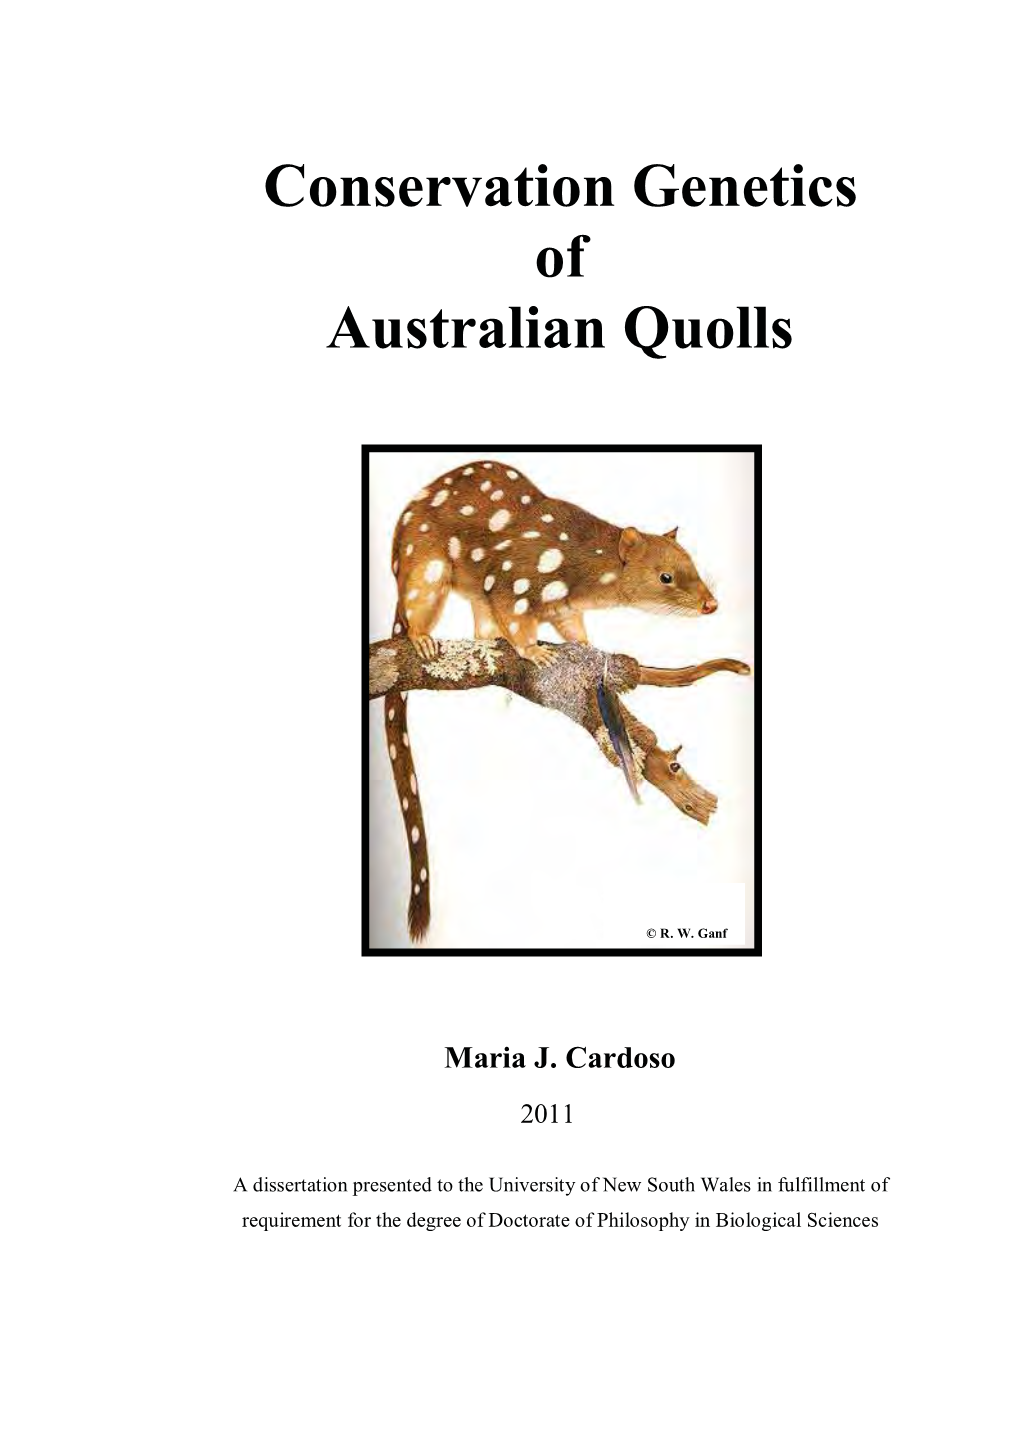 Conservation Genetics of Australian Quolls